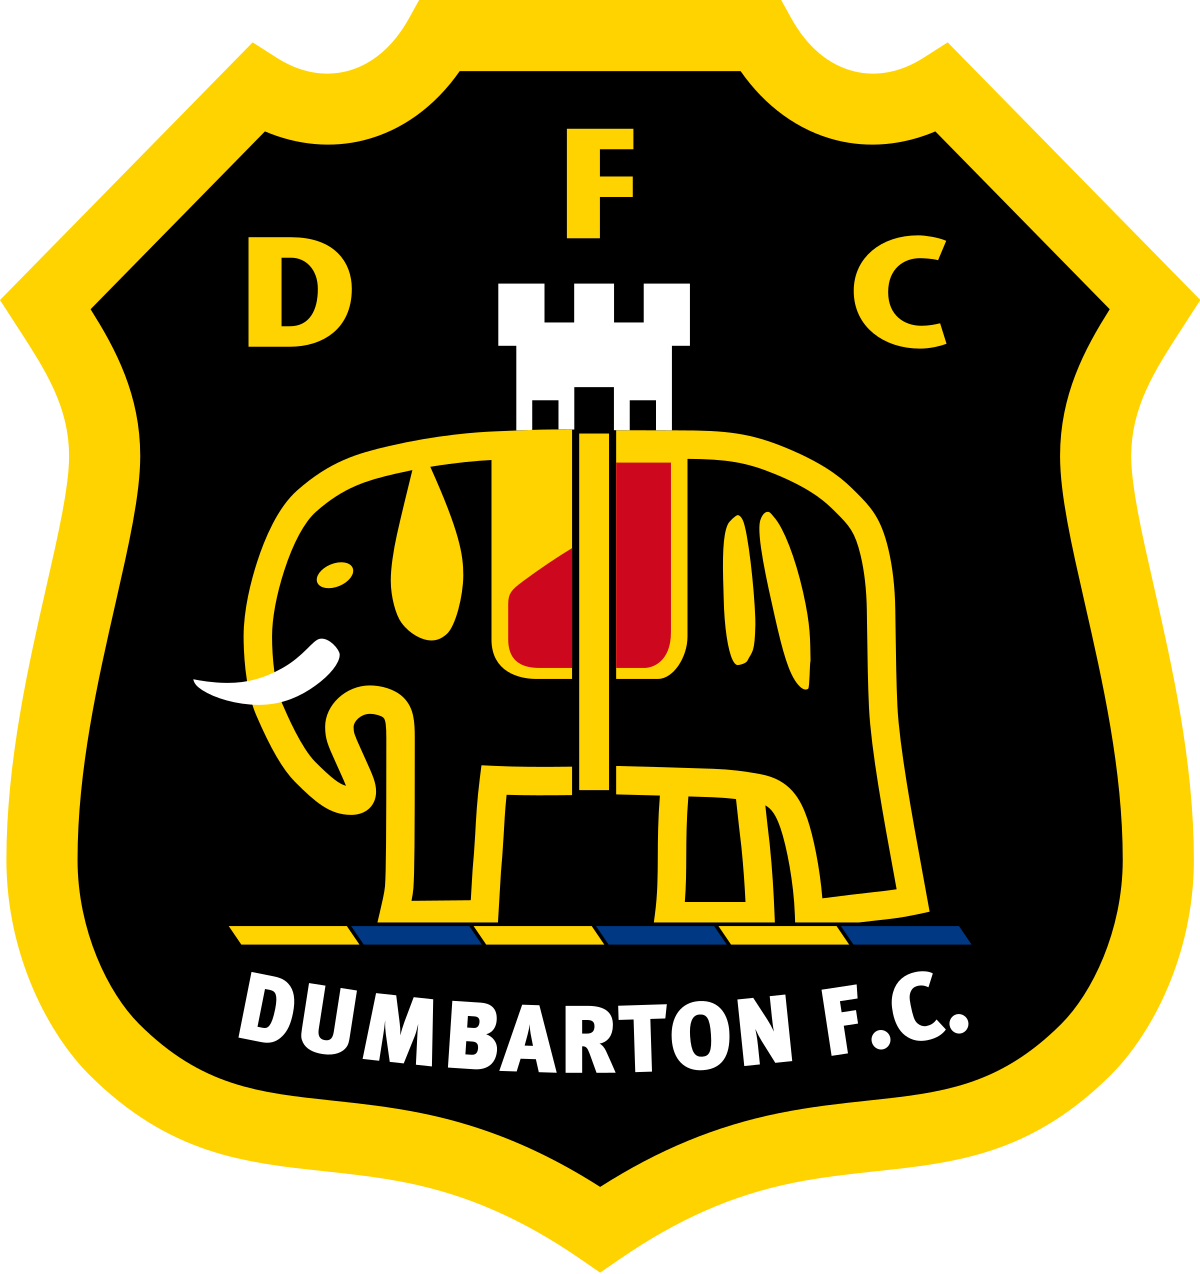 邓巴顿 logo